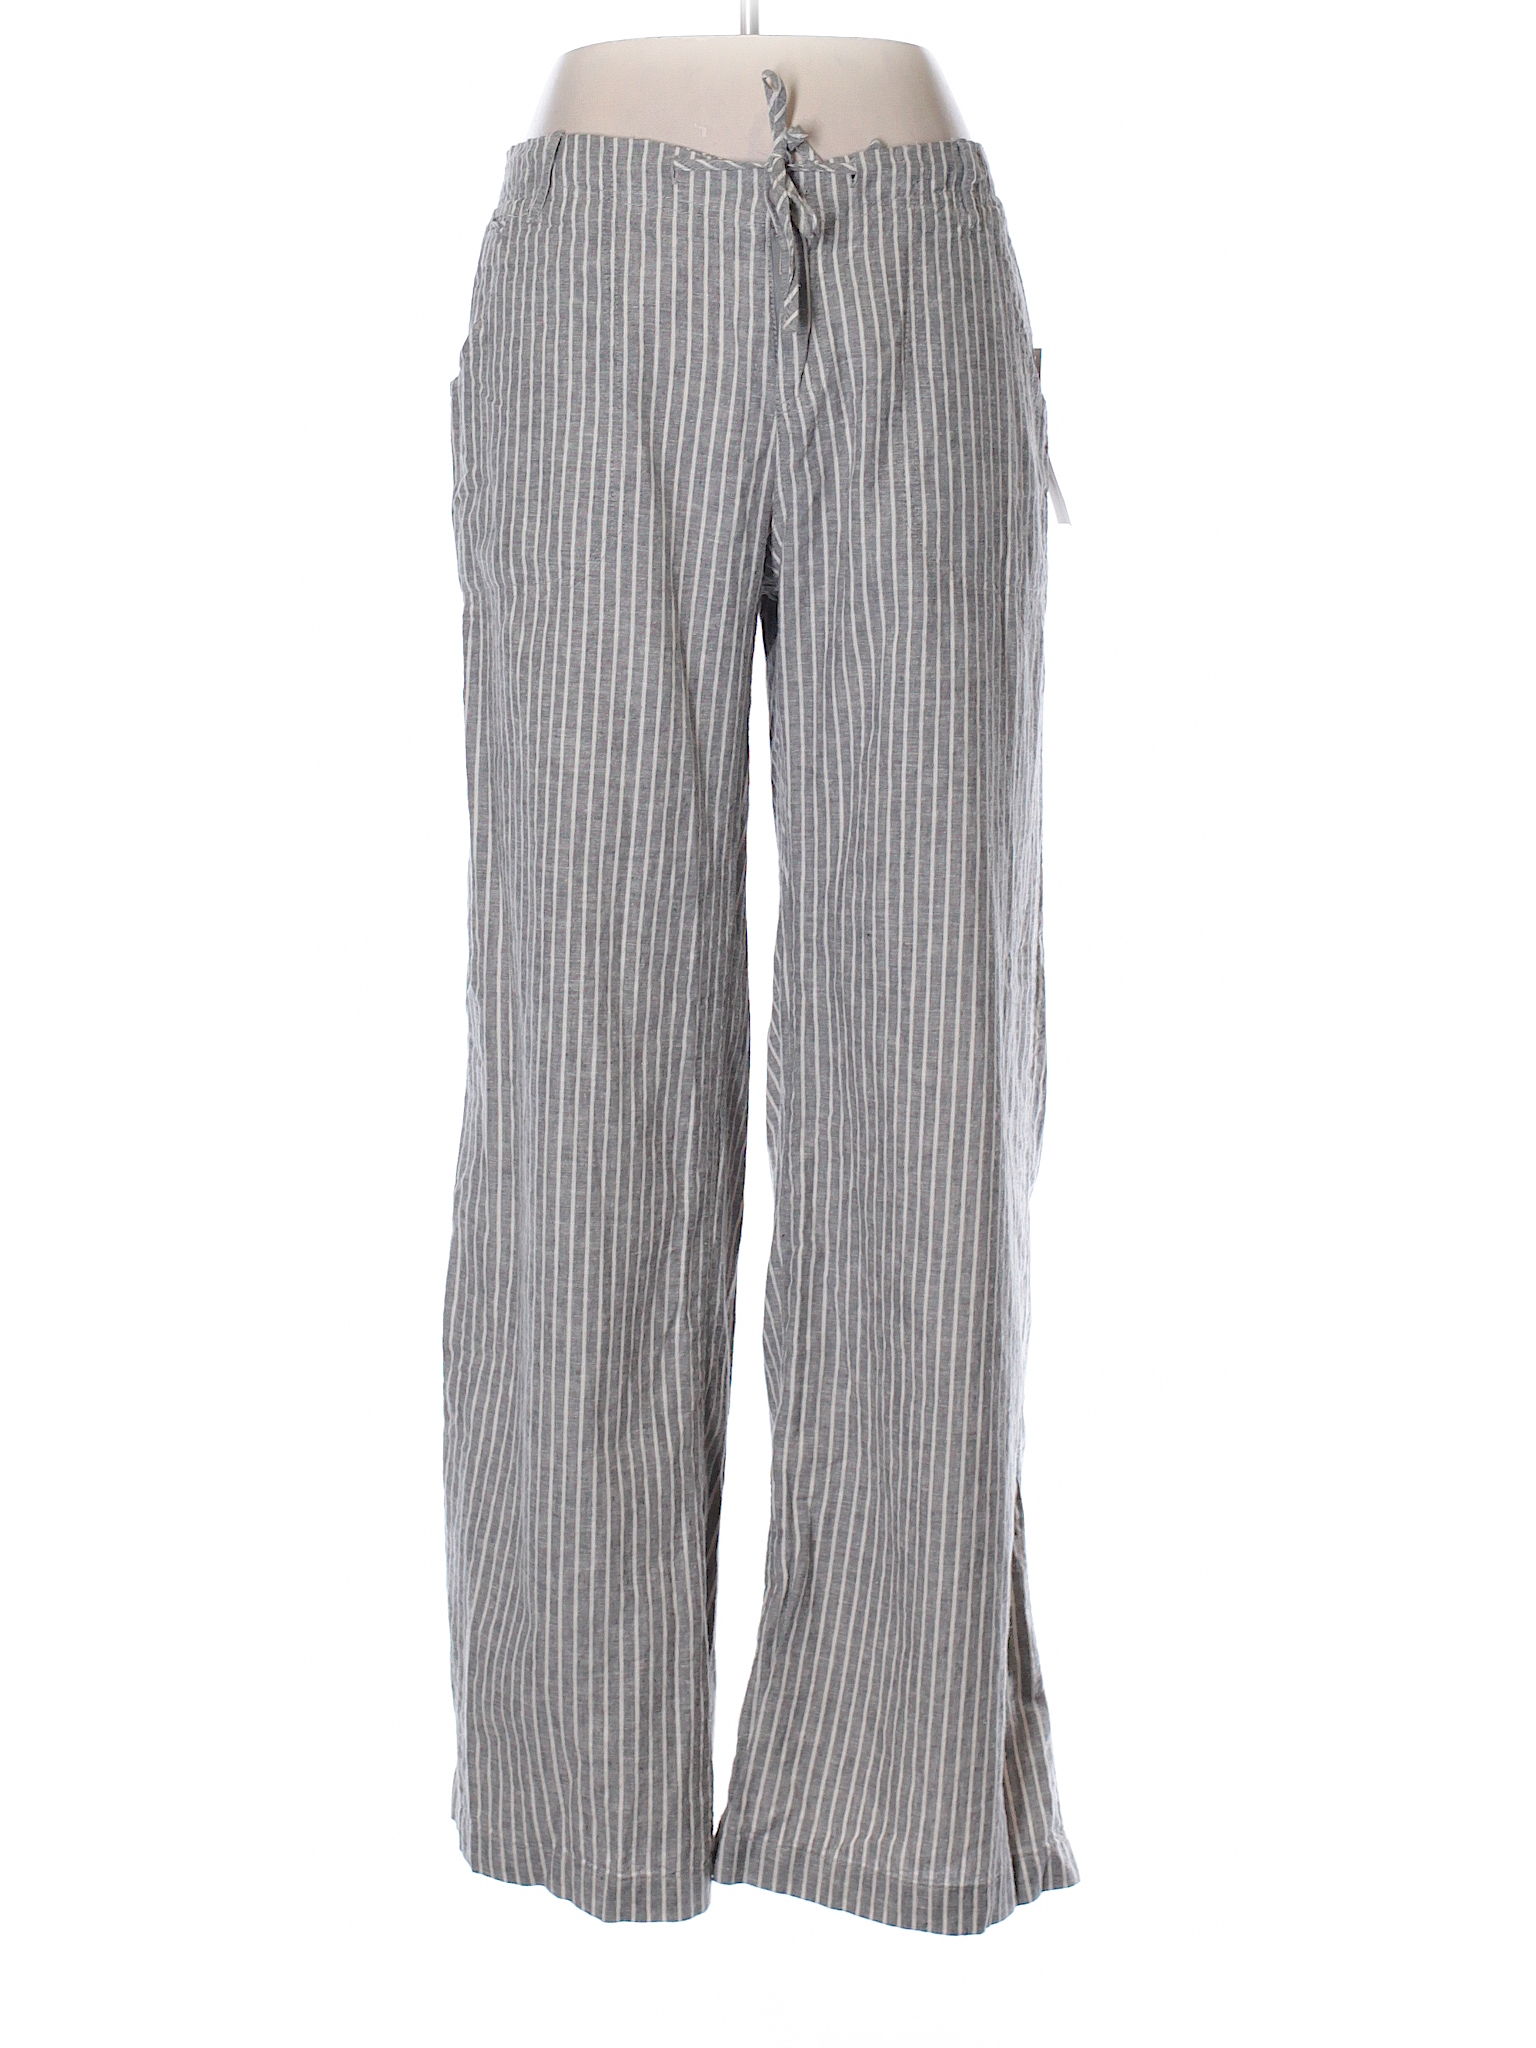 Just Living 100% Linen Stripes Gray Linen Pants Size L - 66% off | thredUP